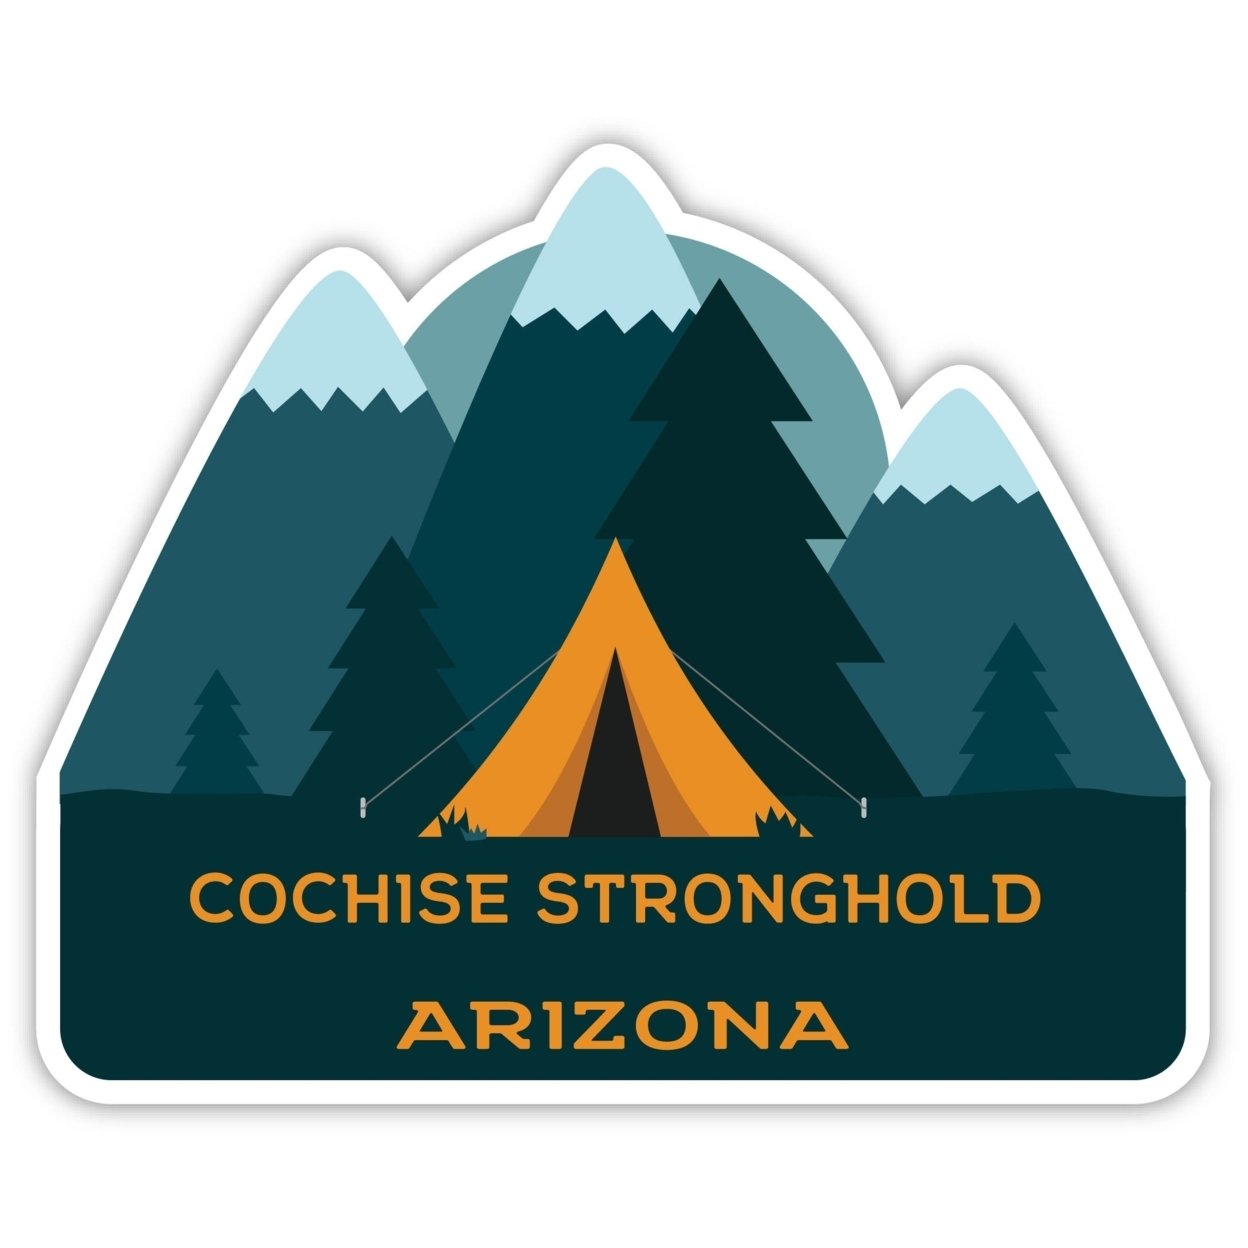 Cochise Stronghold Arizona Souvenir Decorative Stickers (Choose Theme And Size) - Single Unit, 6-Inch, Tent